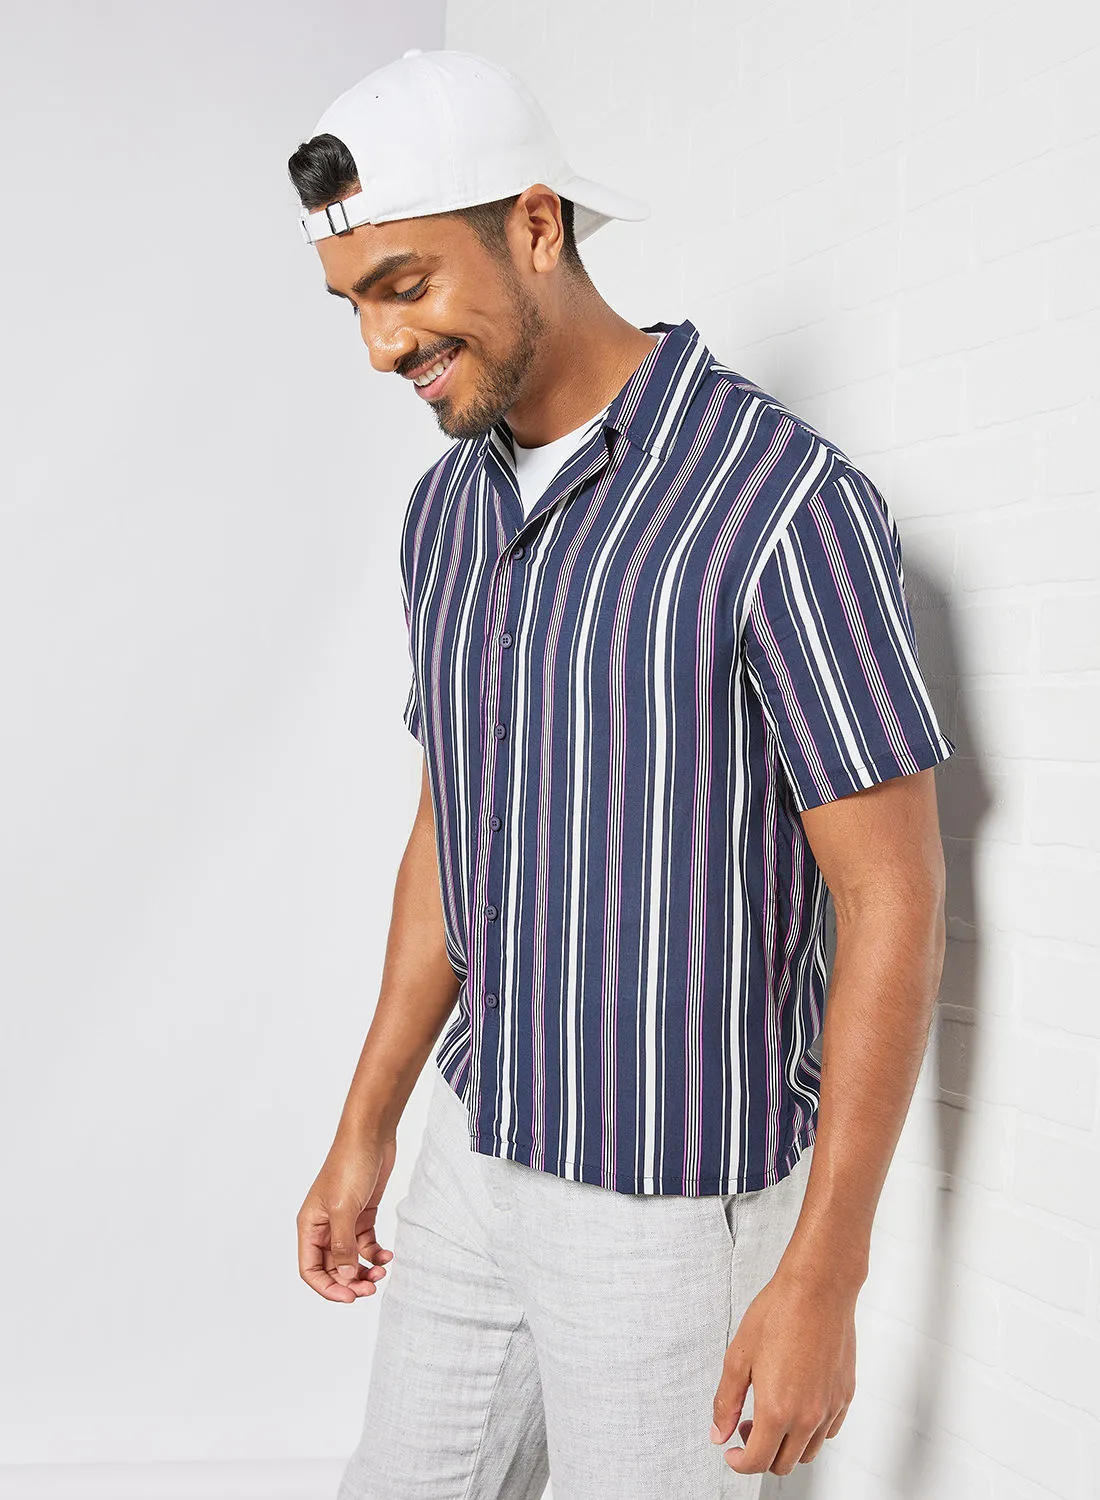 QUWA Bowling Collar Casual Short Sleeve Shirt Navy/White/Purple Stripe